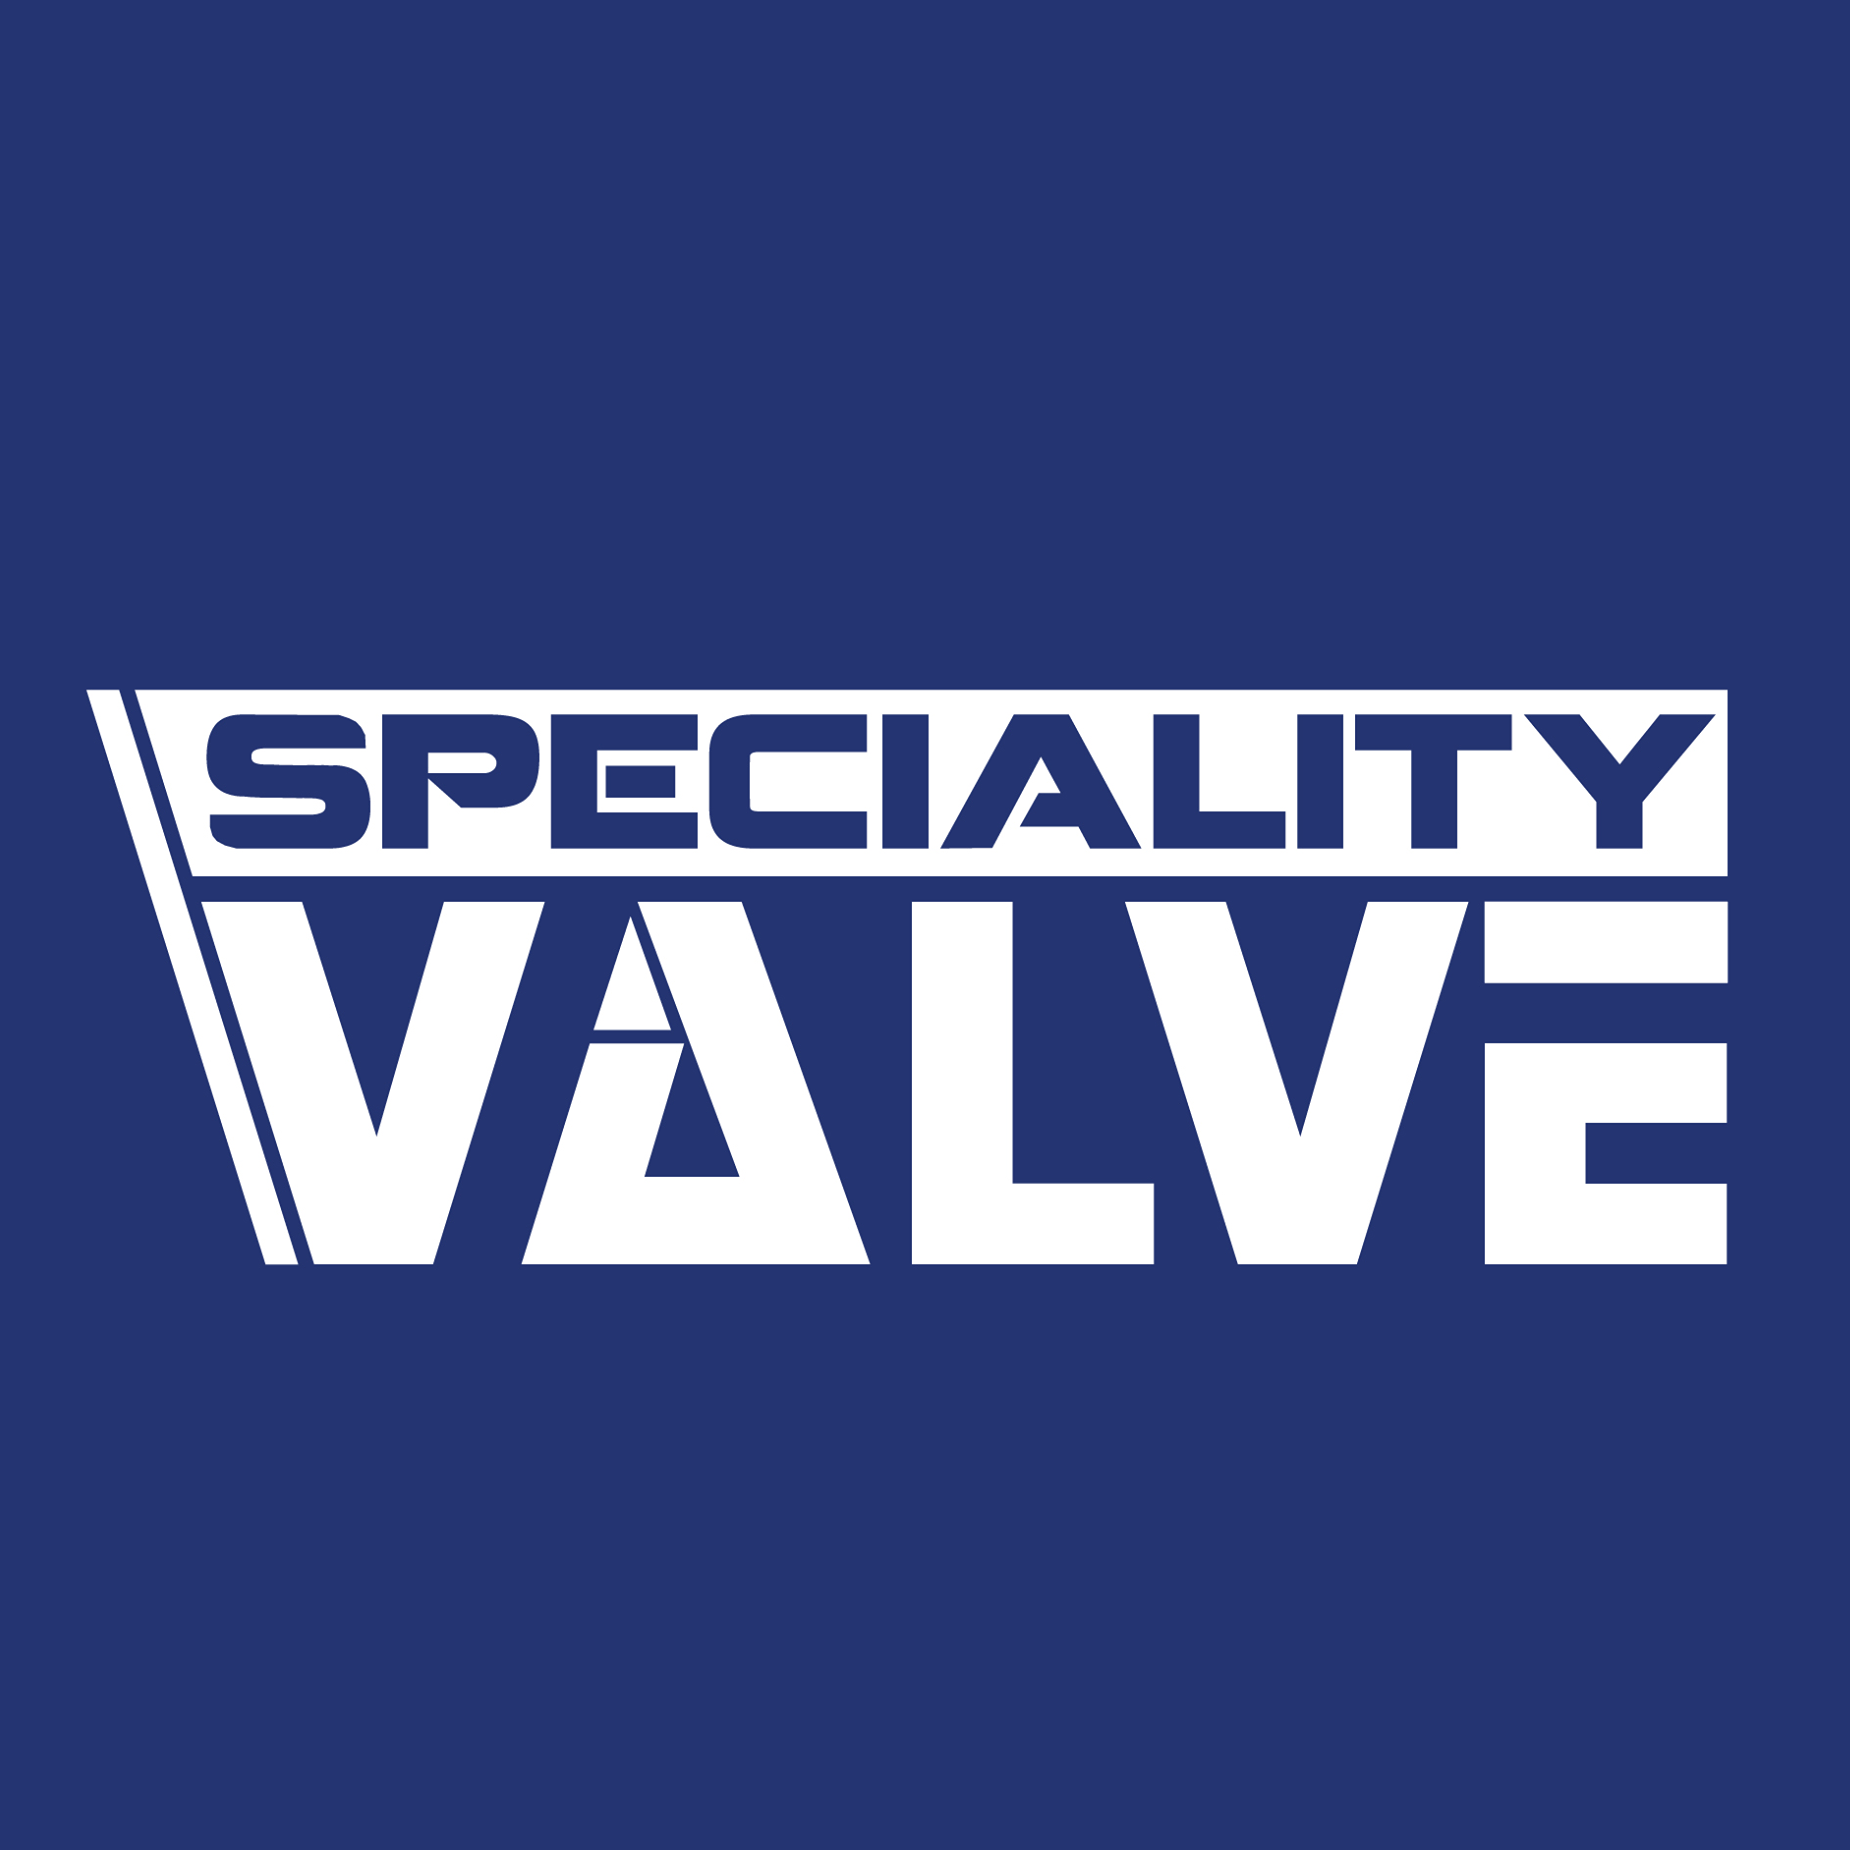 Speciality Valve